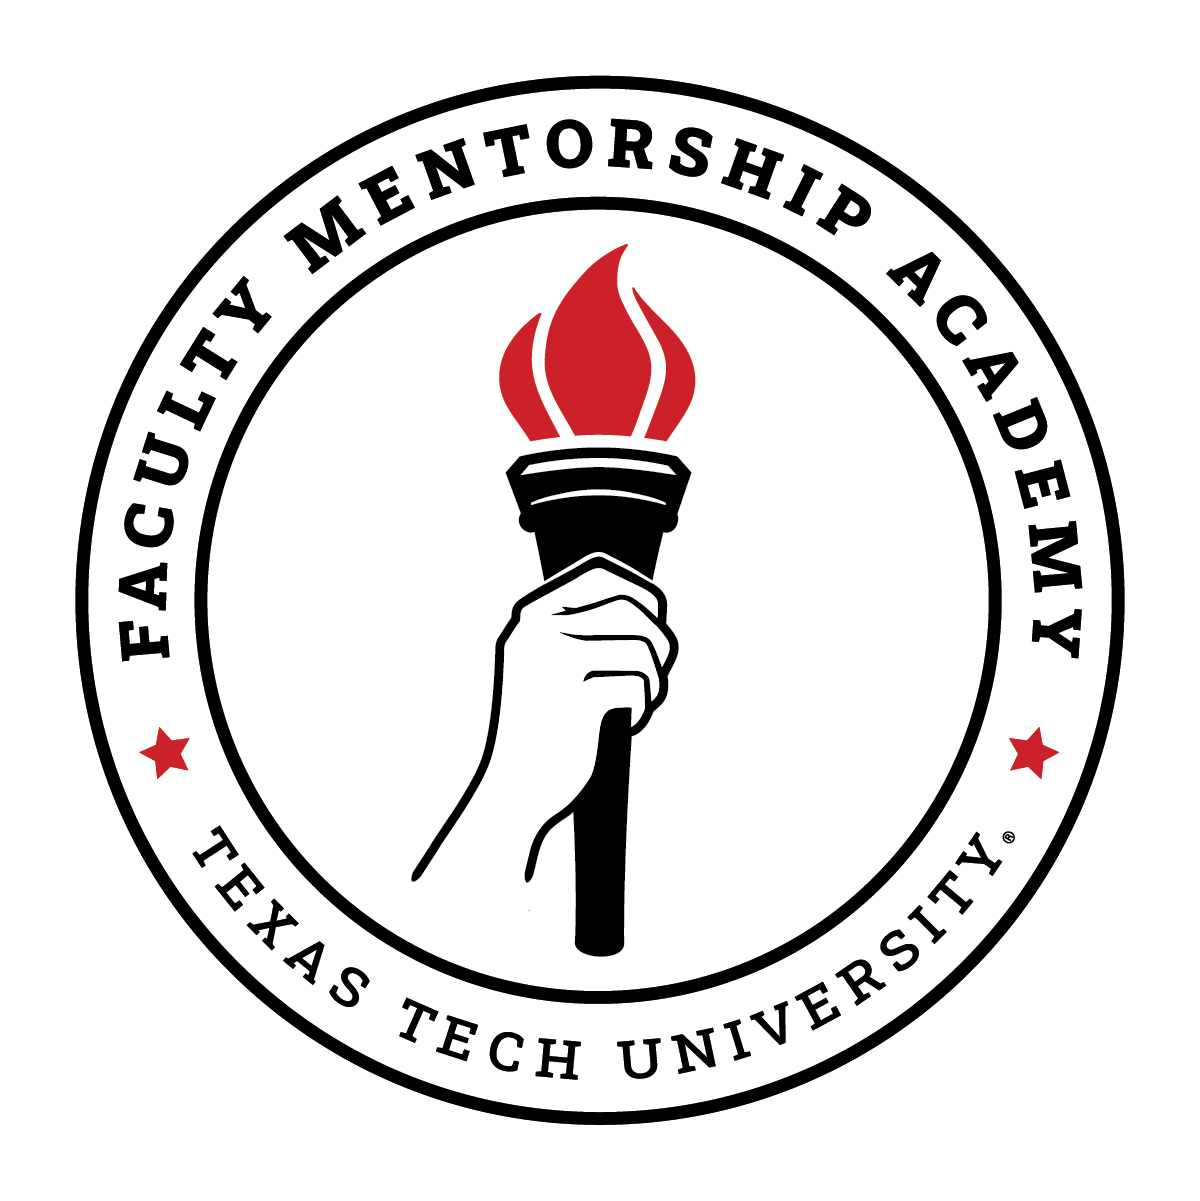 Faculty Mentorship Academy Seal